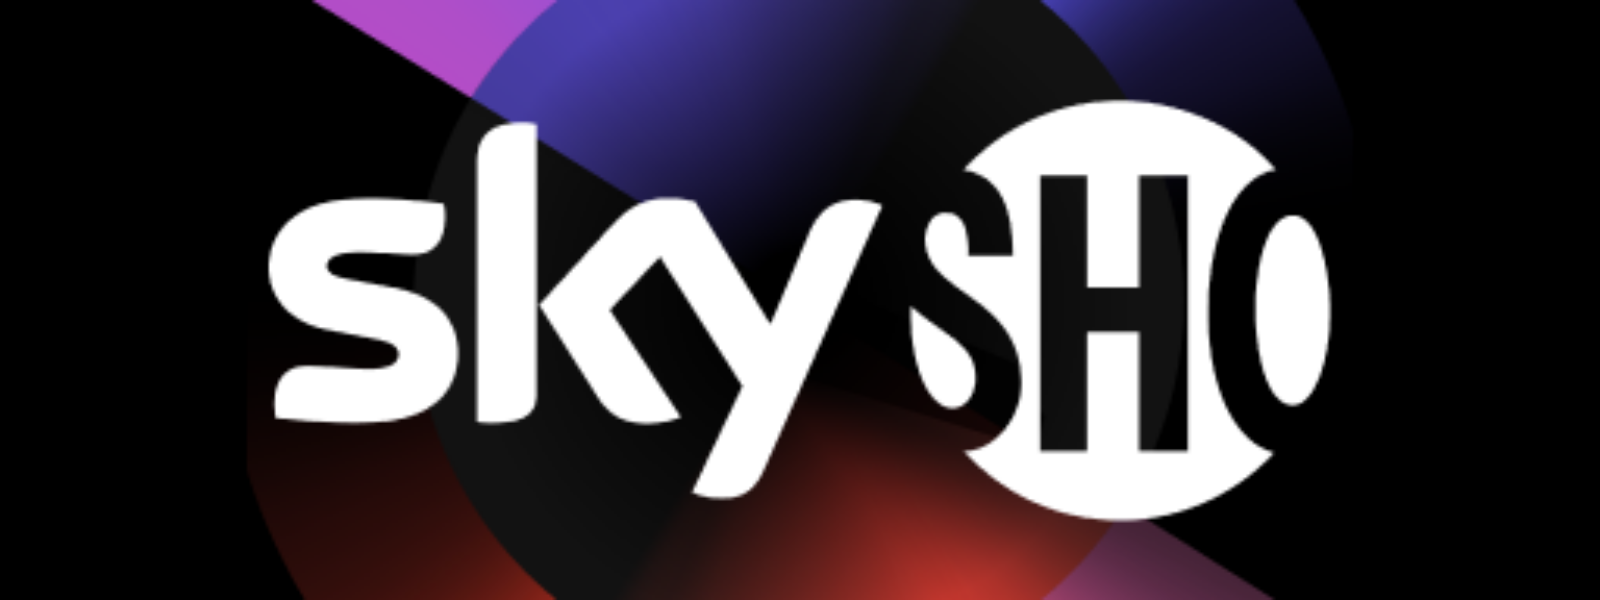 SkyShowtime4,2star pentru Android | iOS